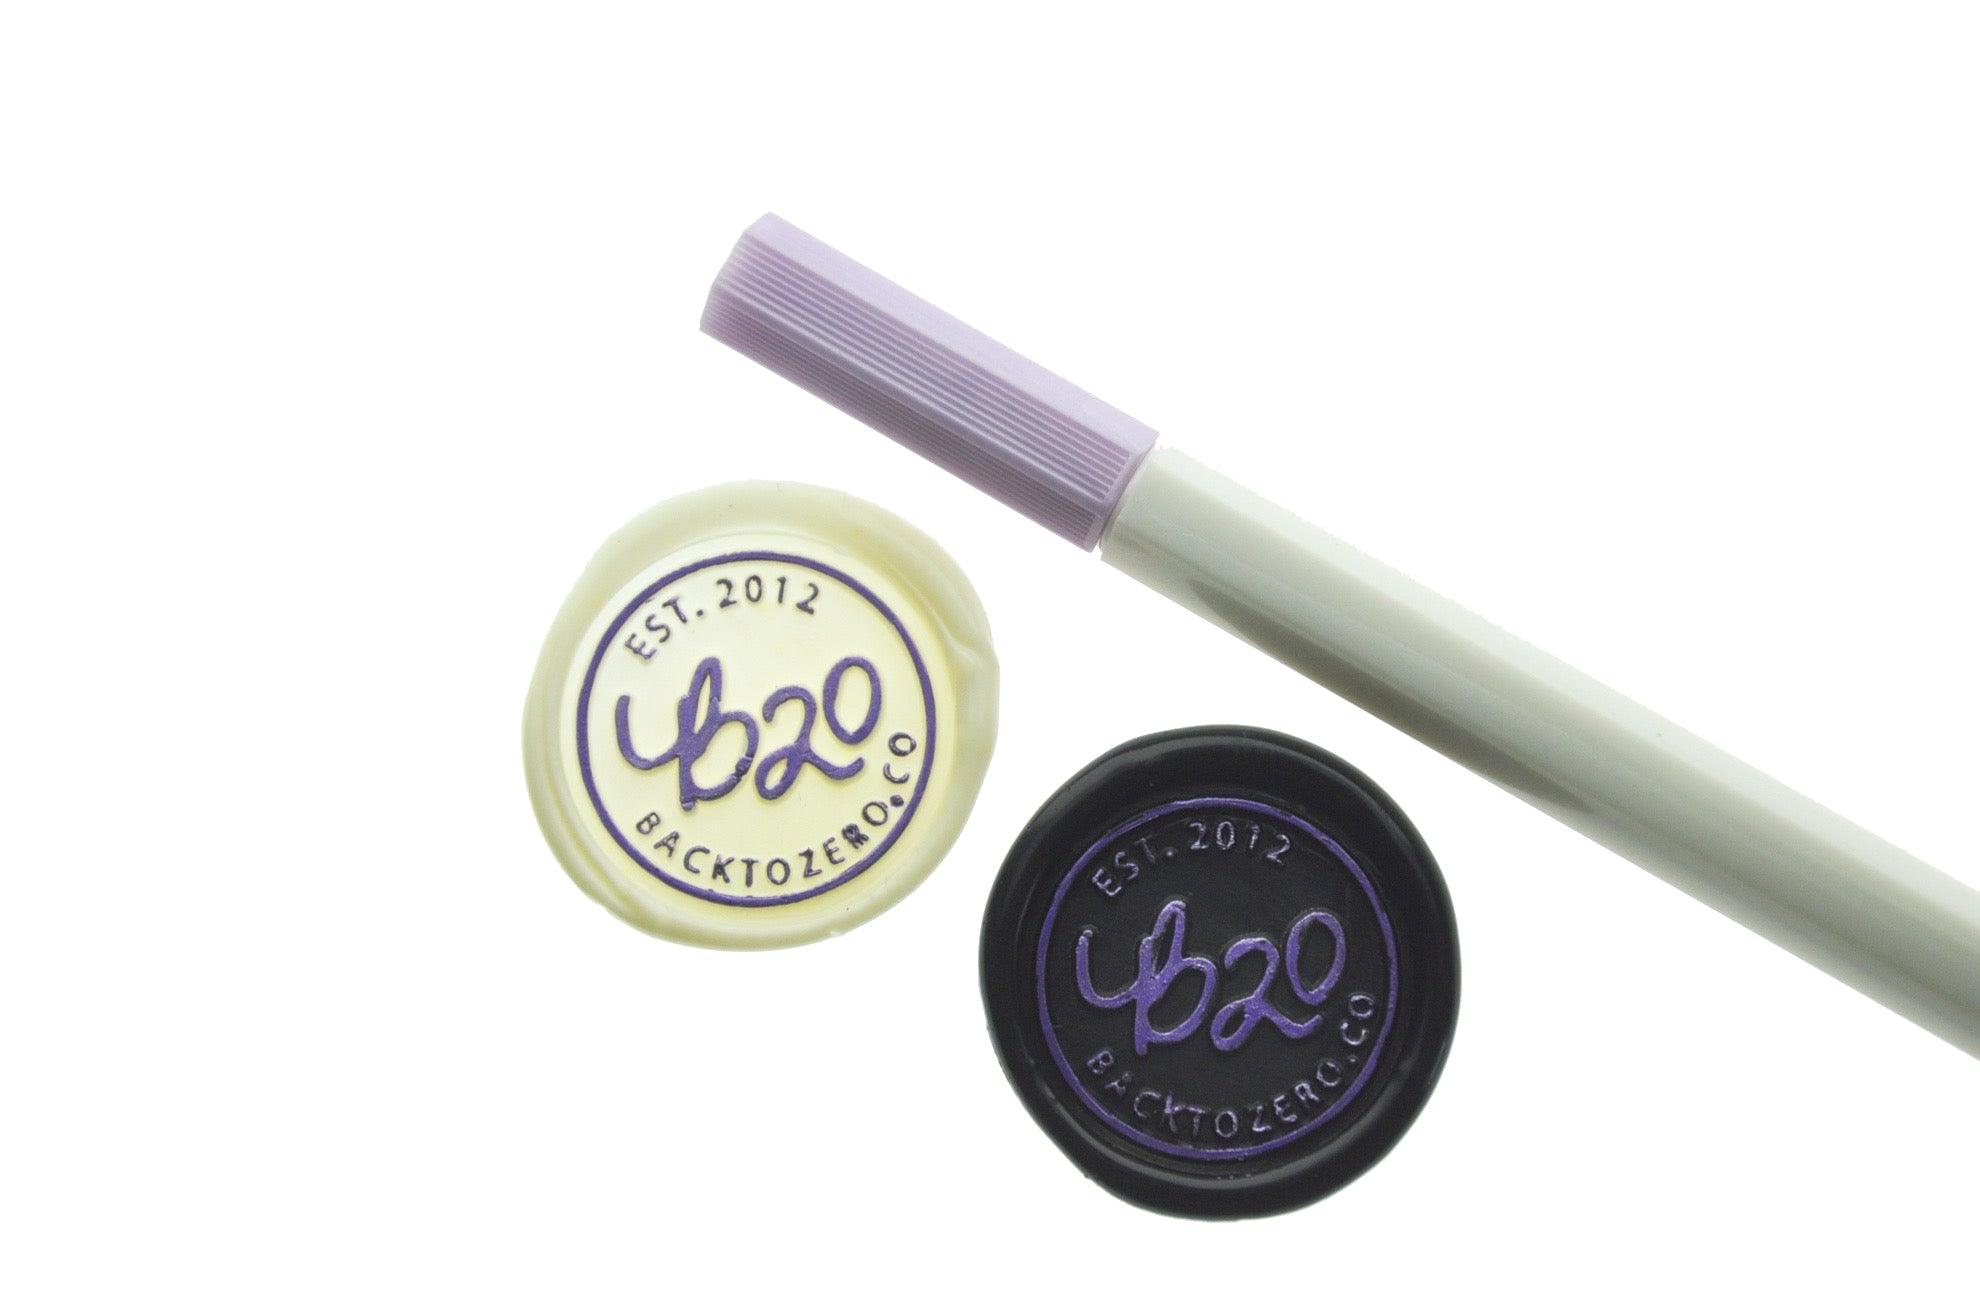 Metallic Purple Highlight Pen - Backtozero B20 - Gold, highlight, Metallic, metallic purple, misc